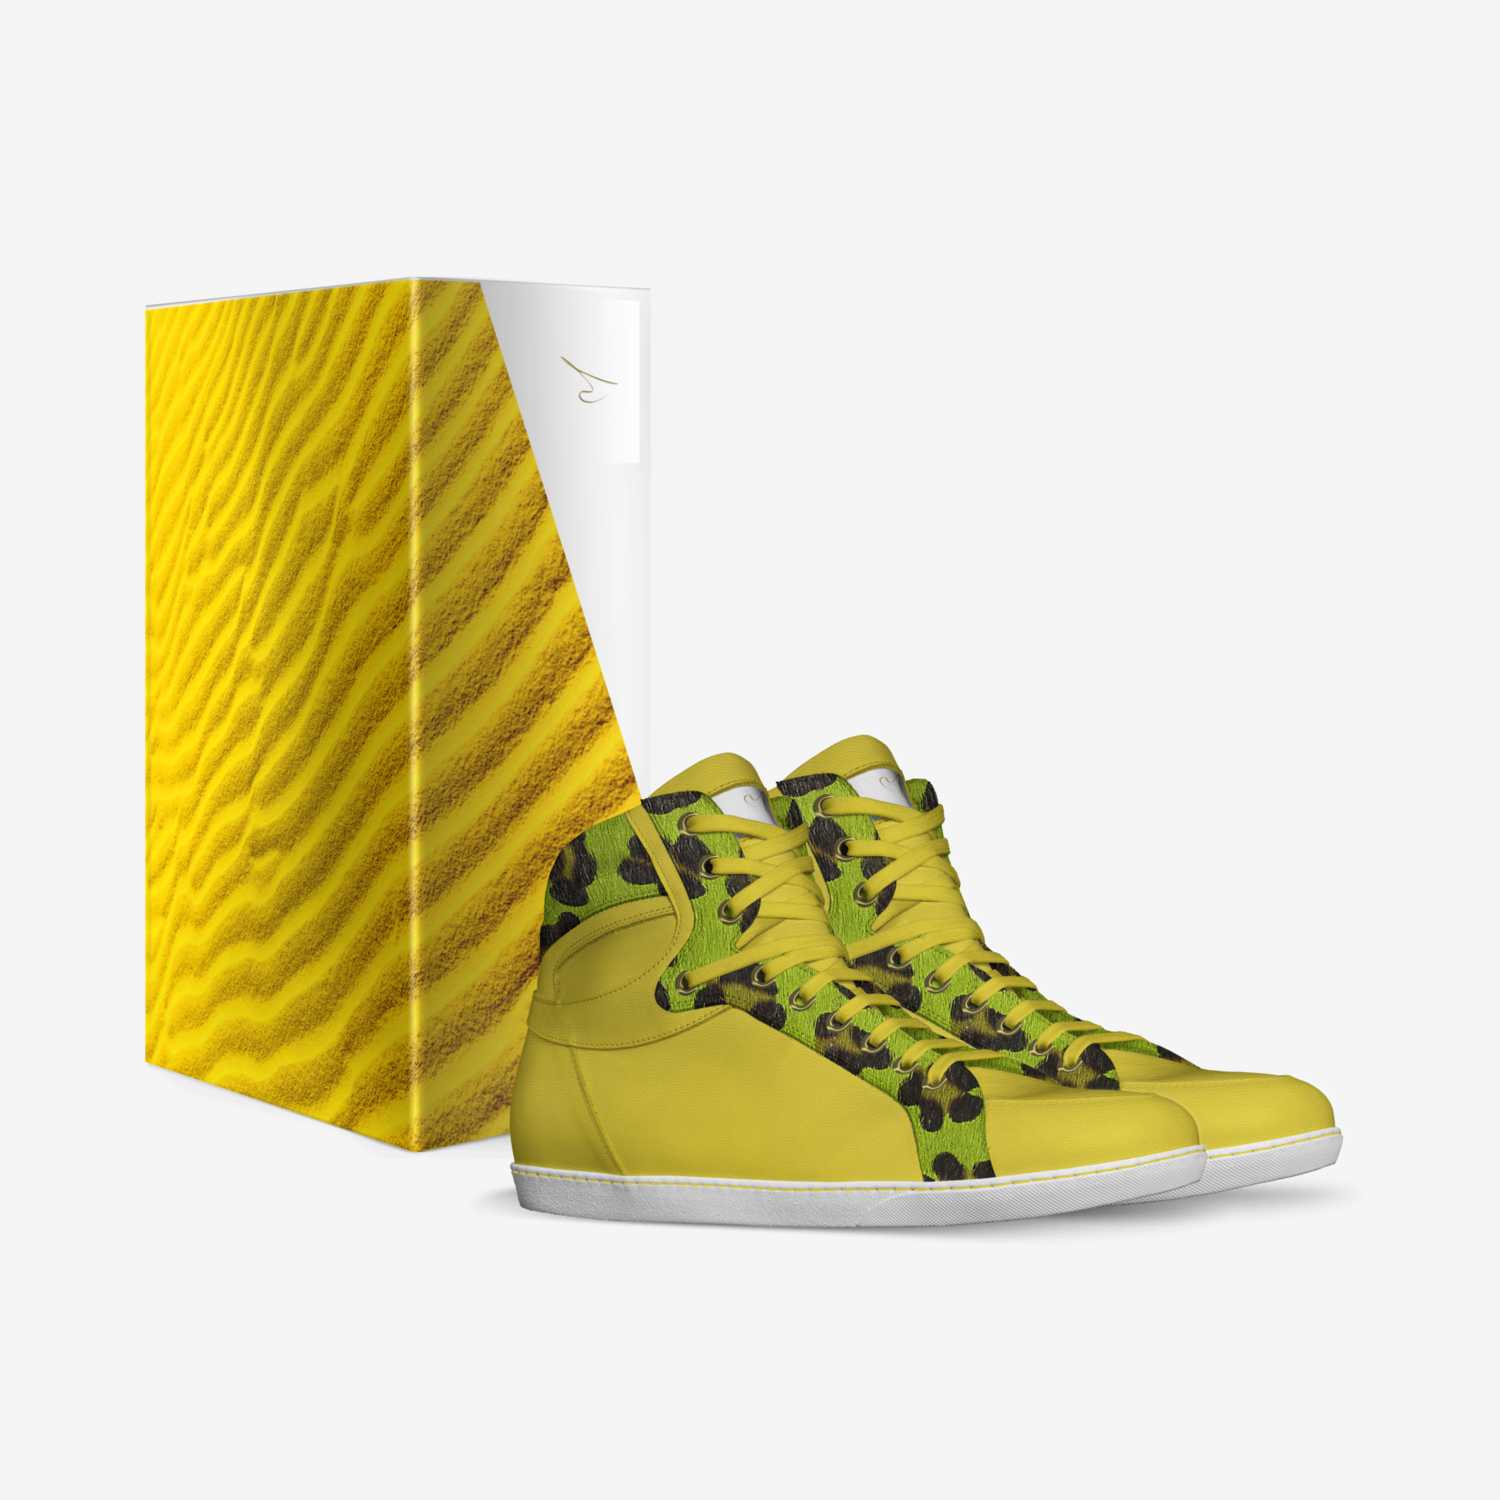 NYSS custom made in Italy shoes by Isha Knight | Box view